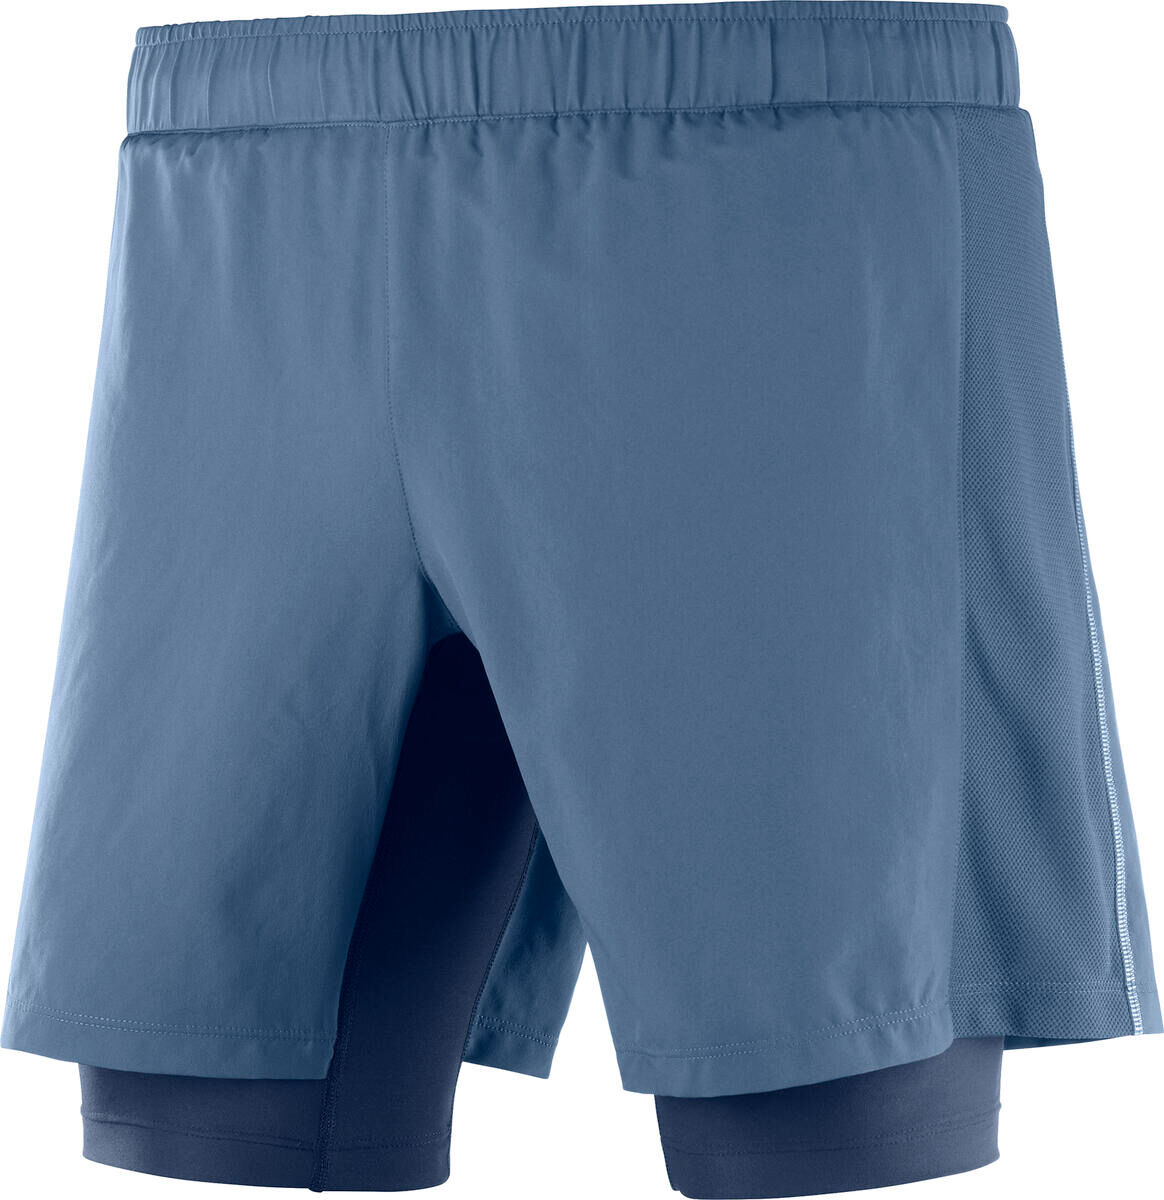 Salomon Agile Twinskin Short - Running shorts - Men's